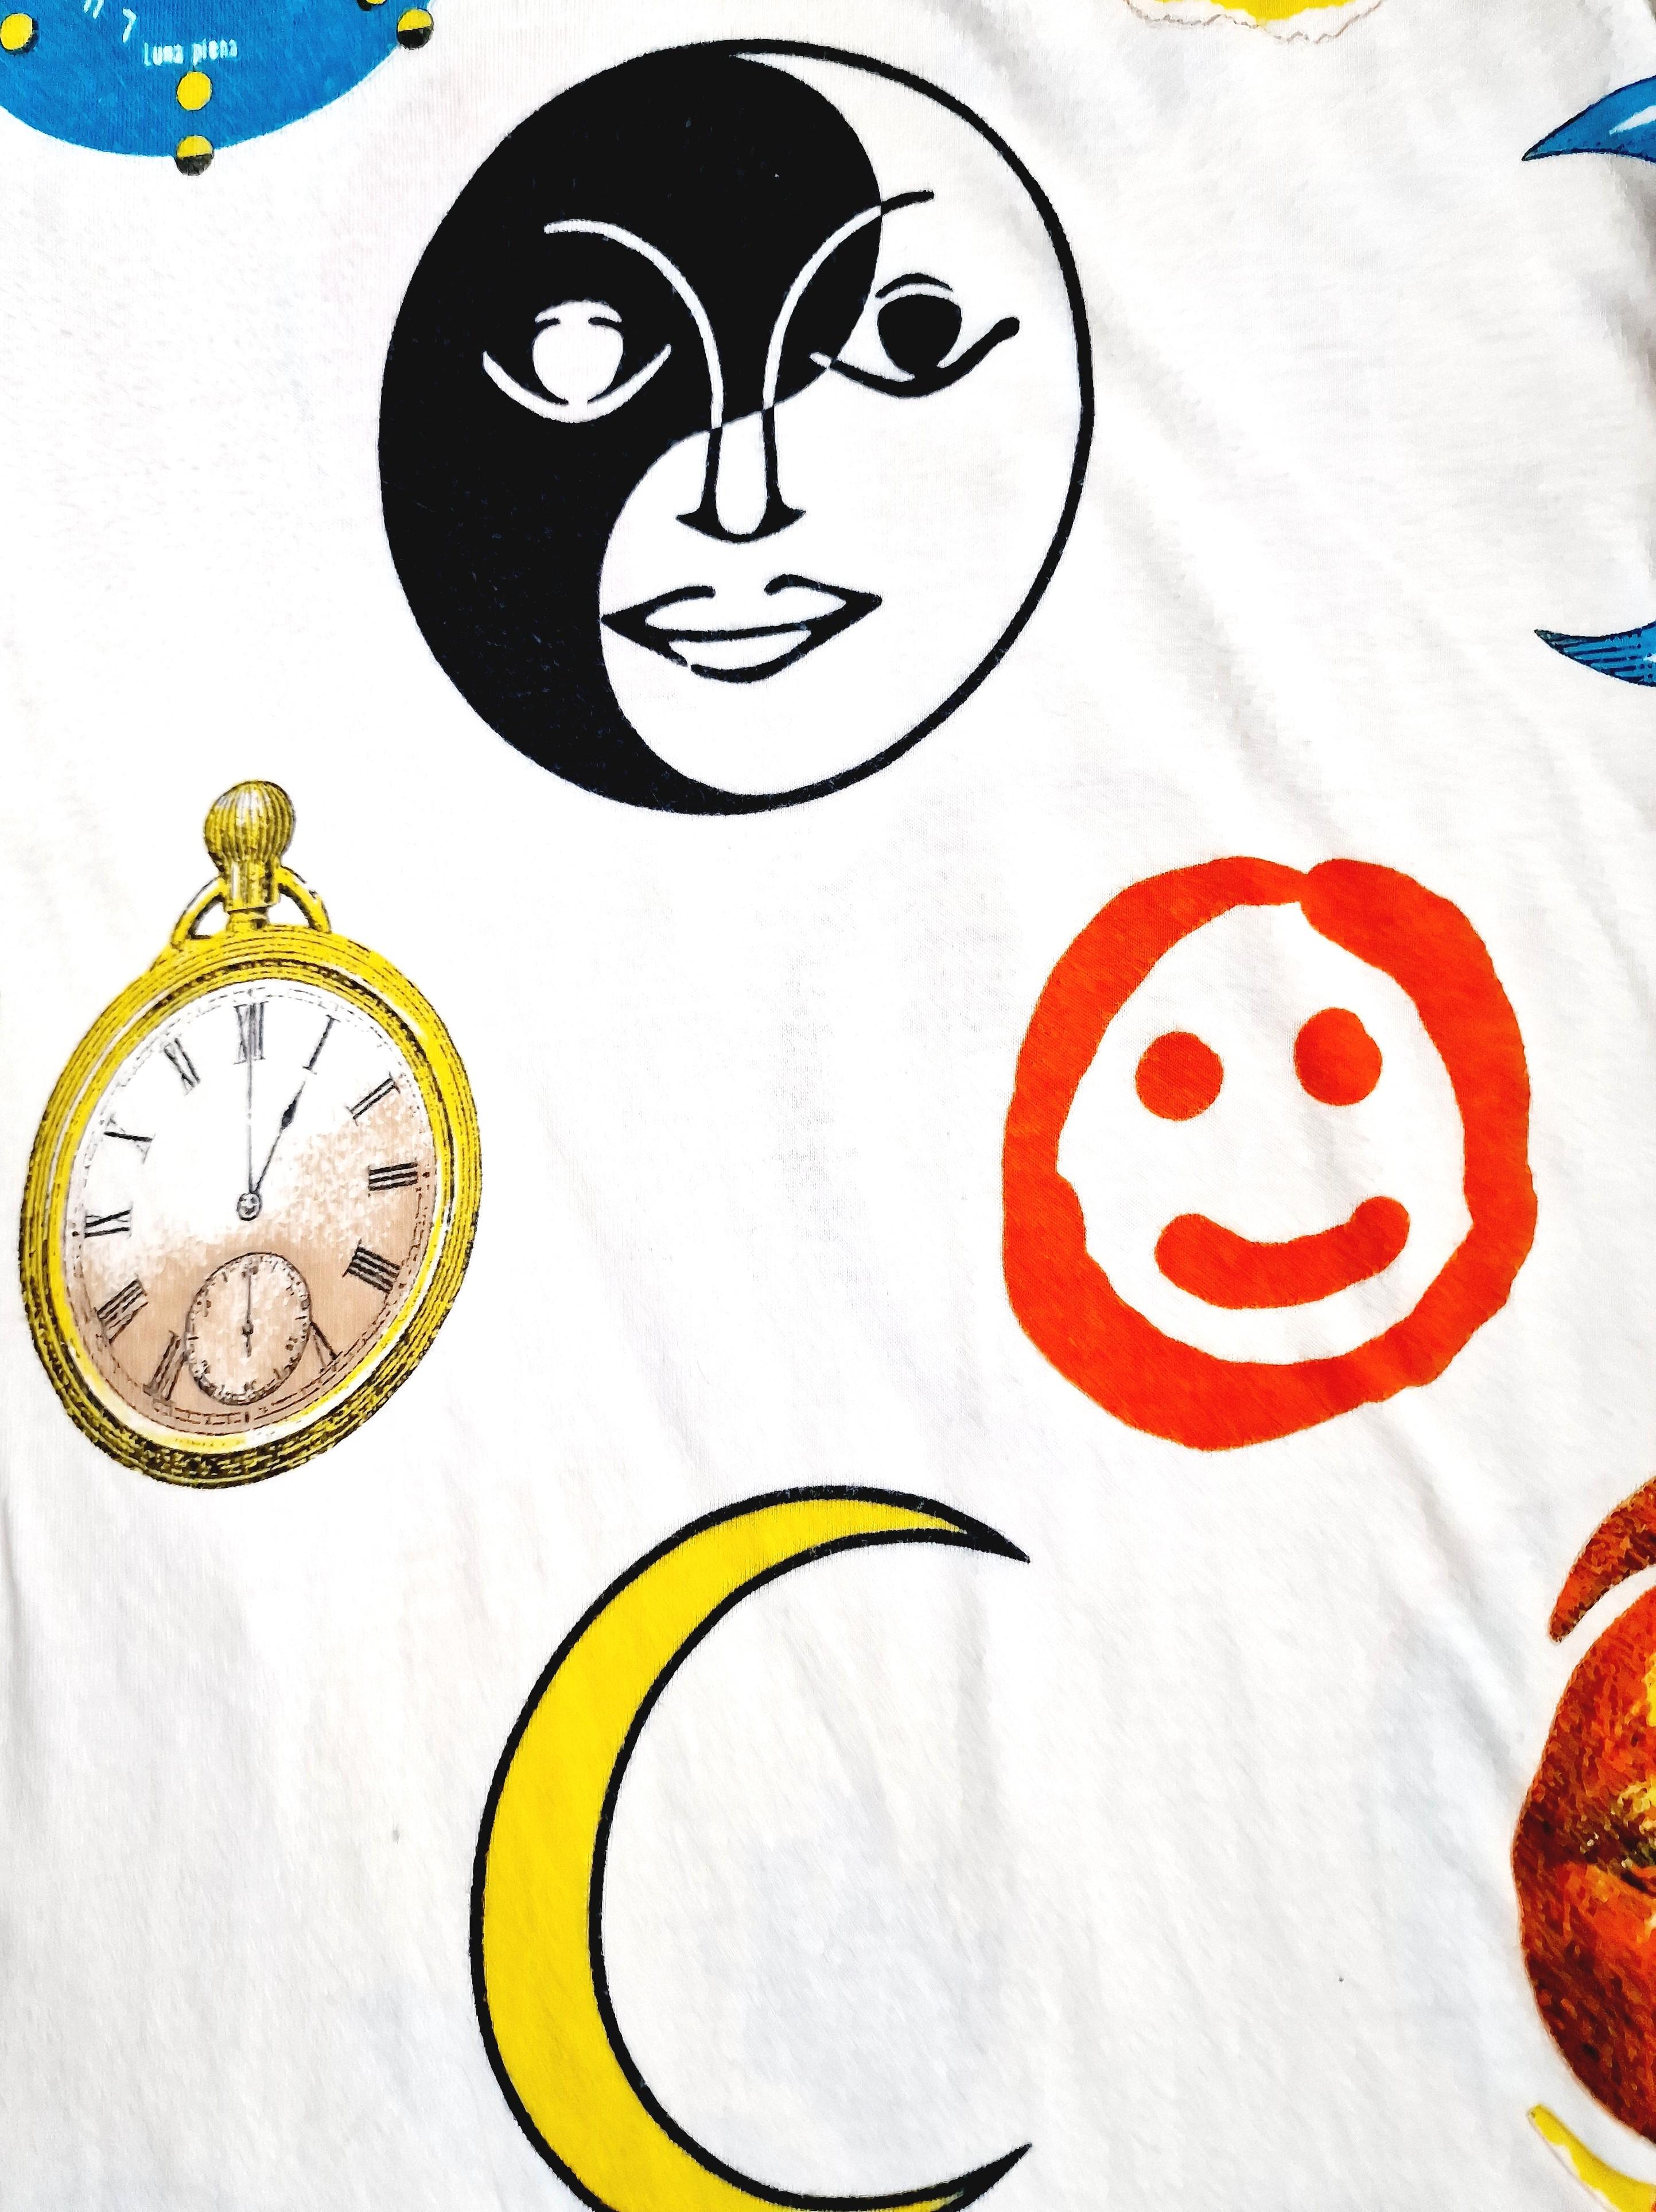 Moschino Symbol Round Moon Sun Peace Money Smily Jin Jang Medium Top Tee T-shirt For Sale 1